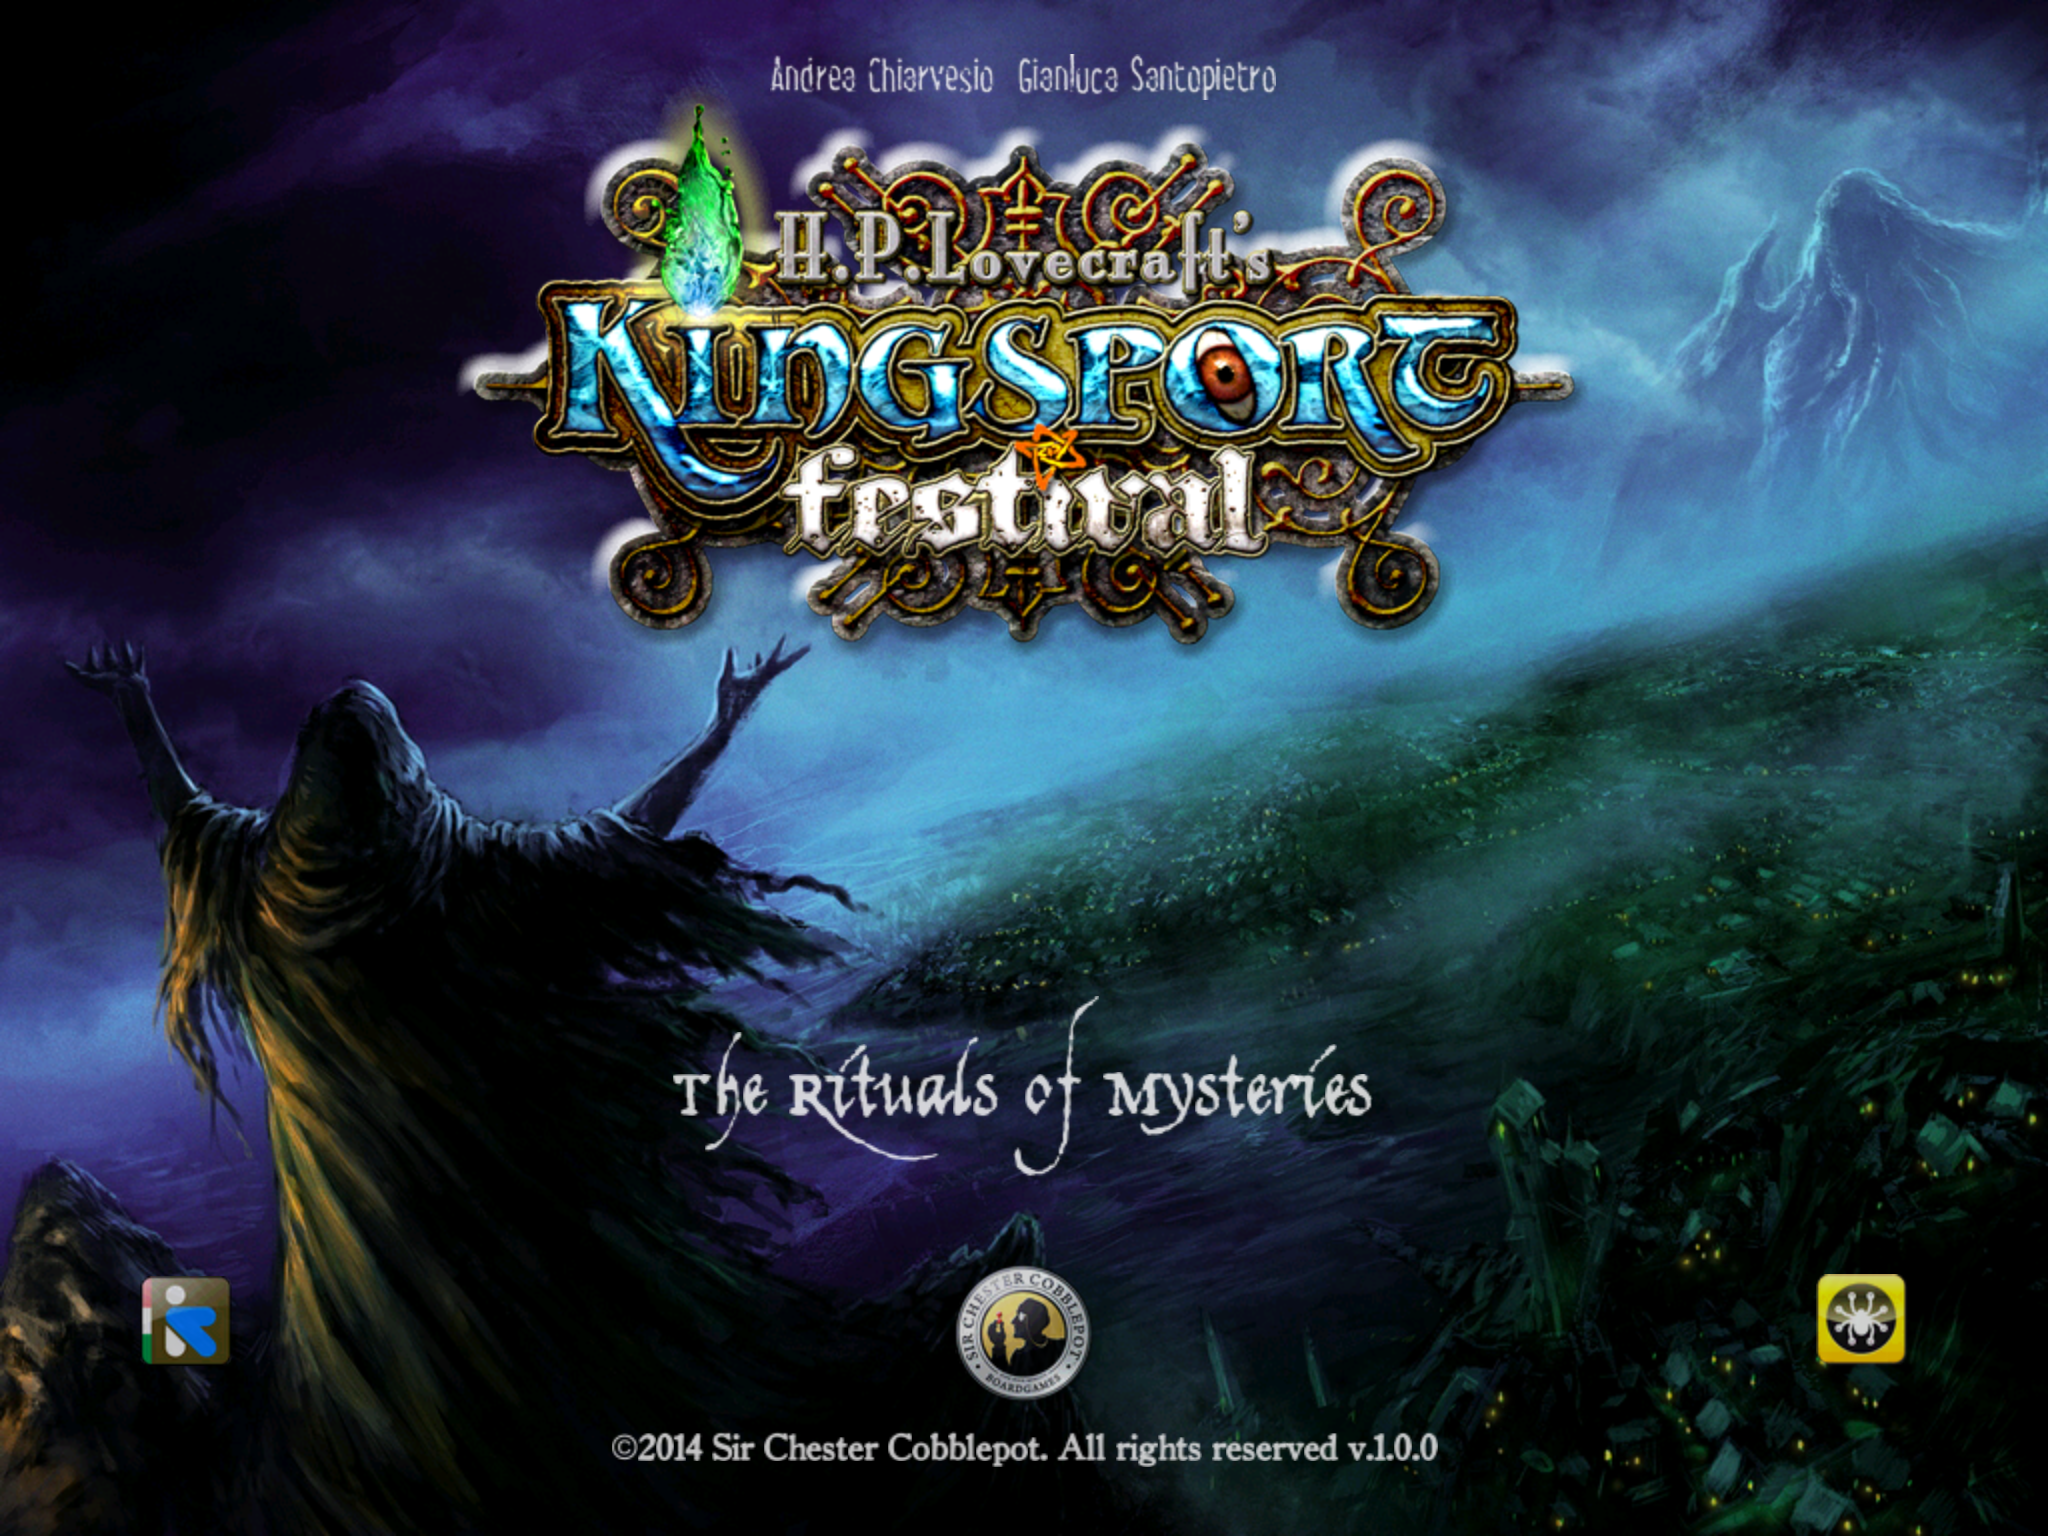 Android application Kingsport Festival screenshort